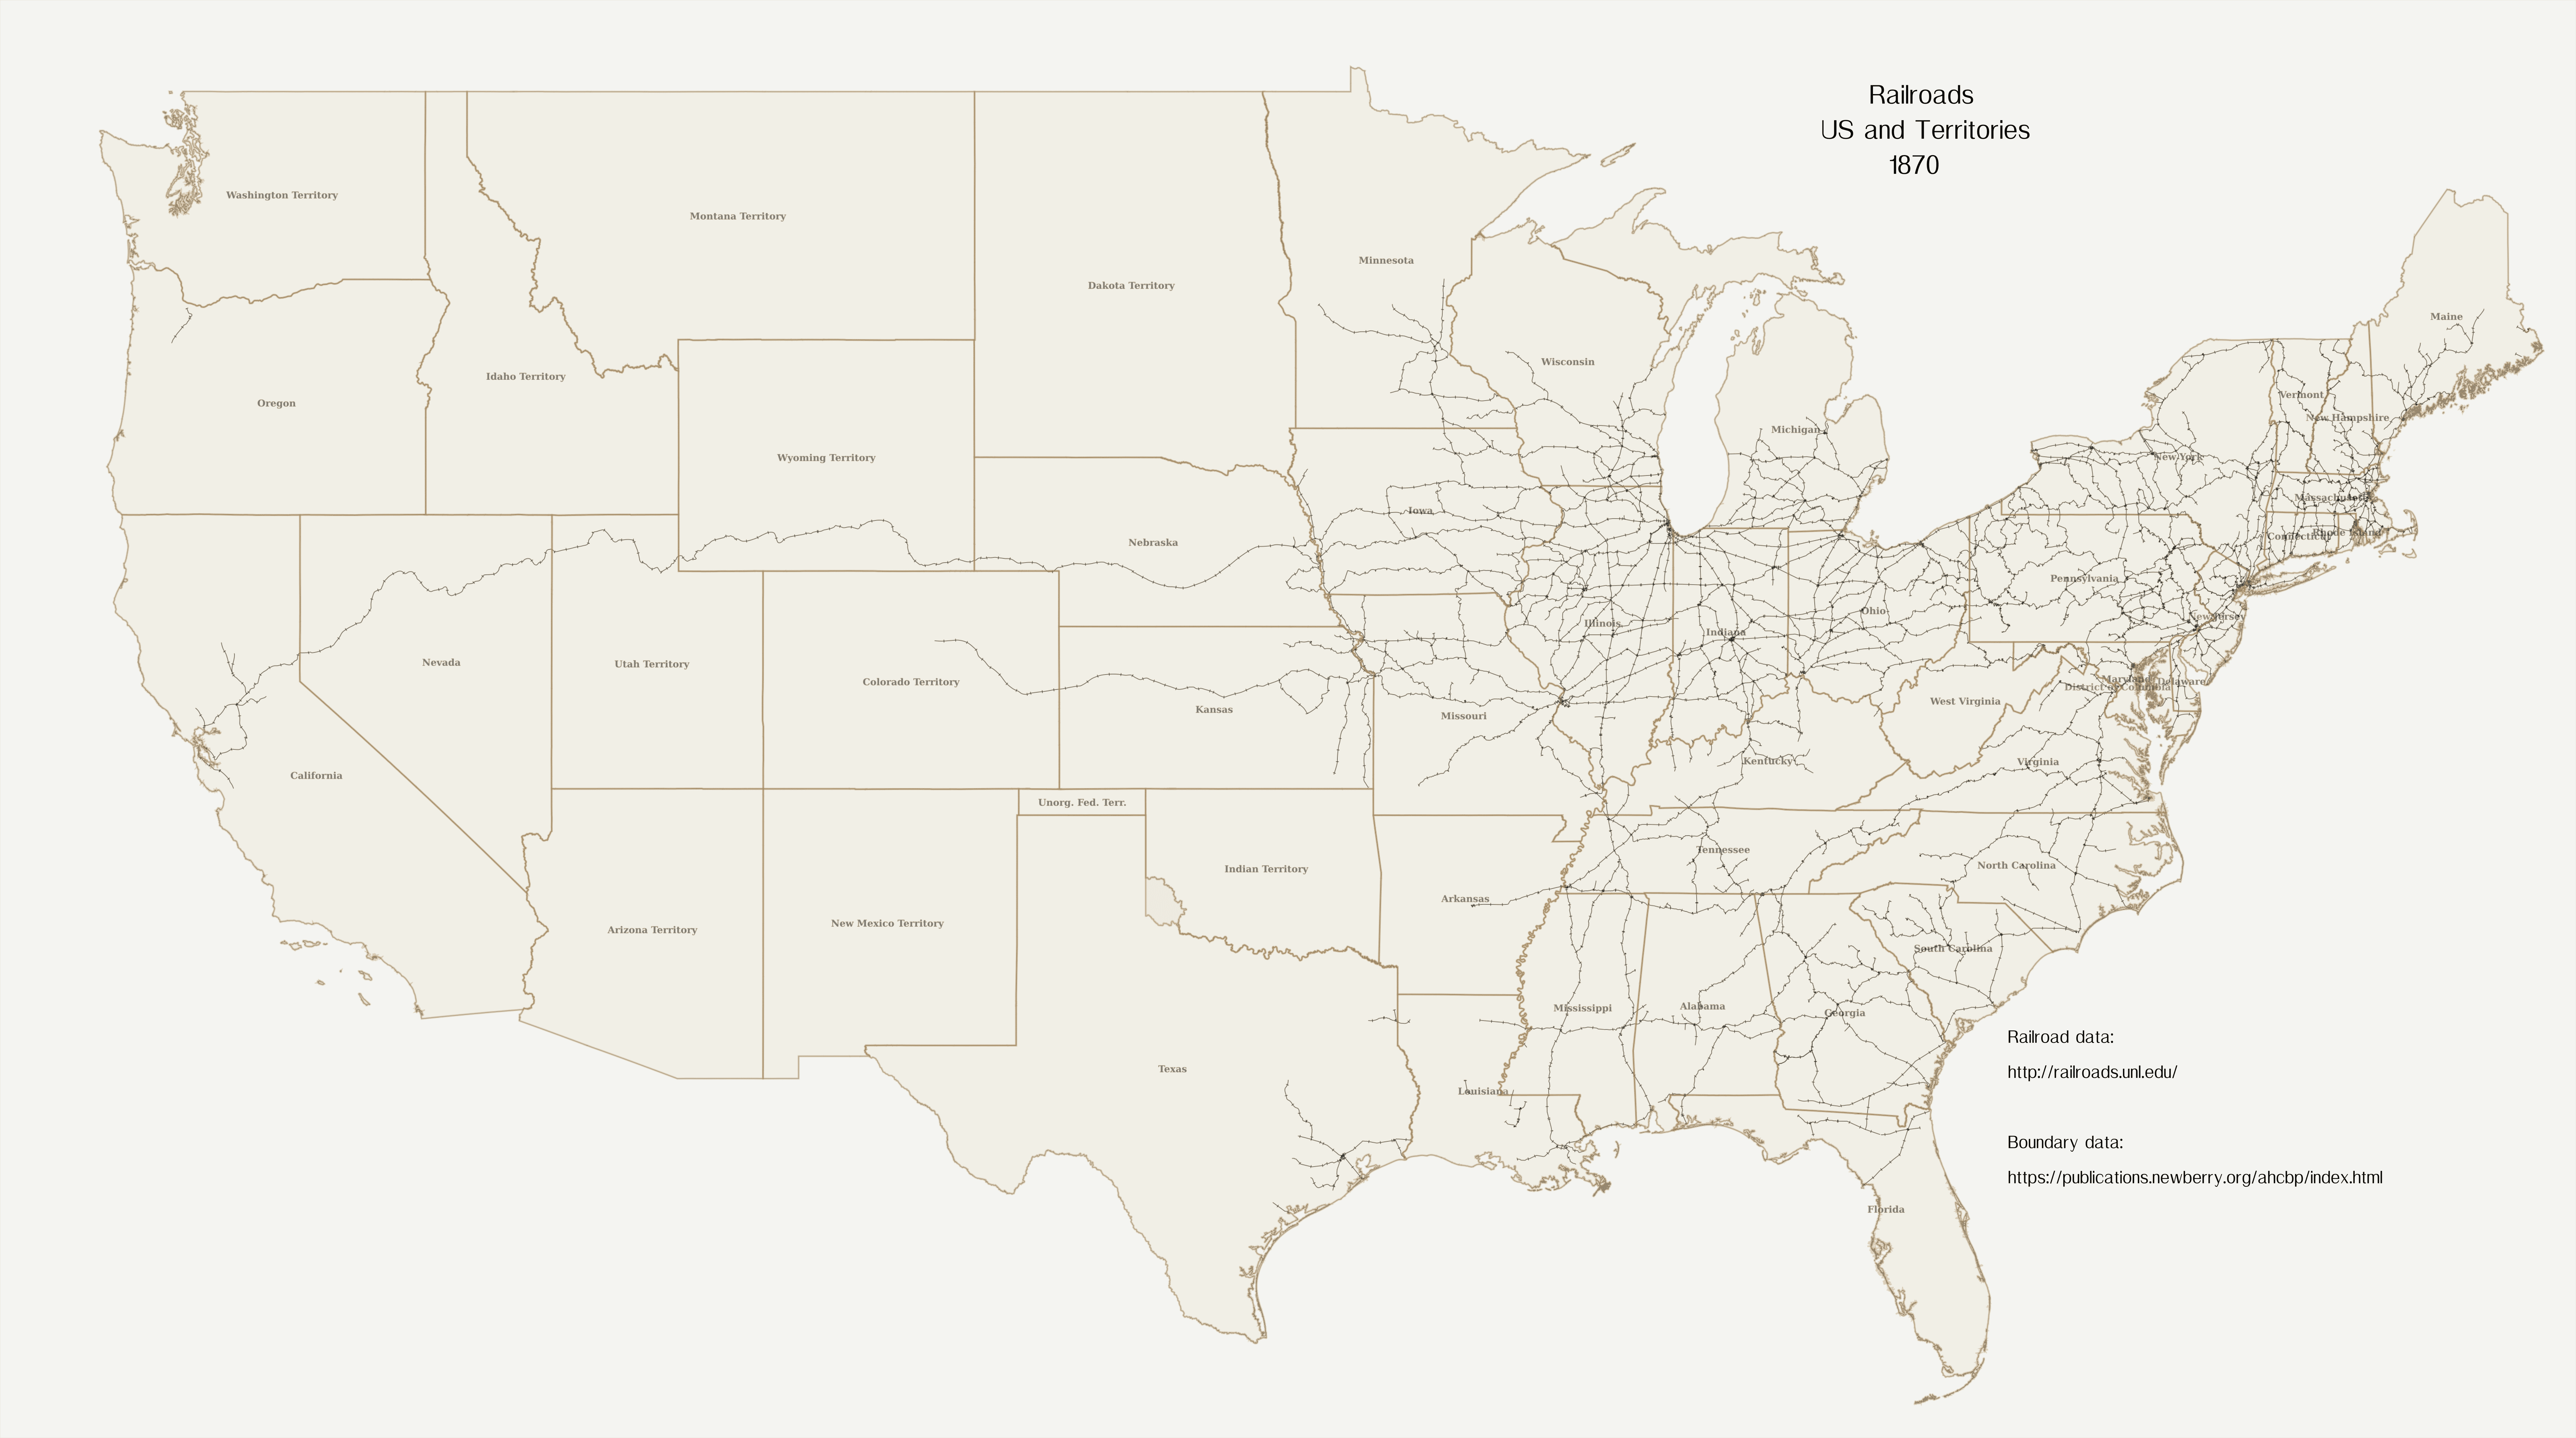 1870 Railroads image